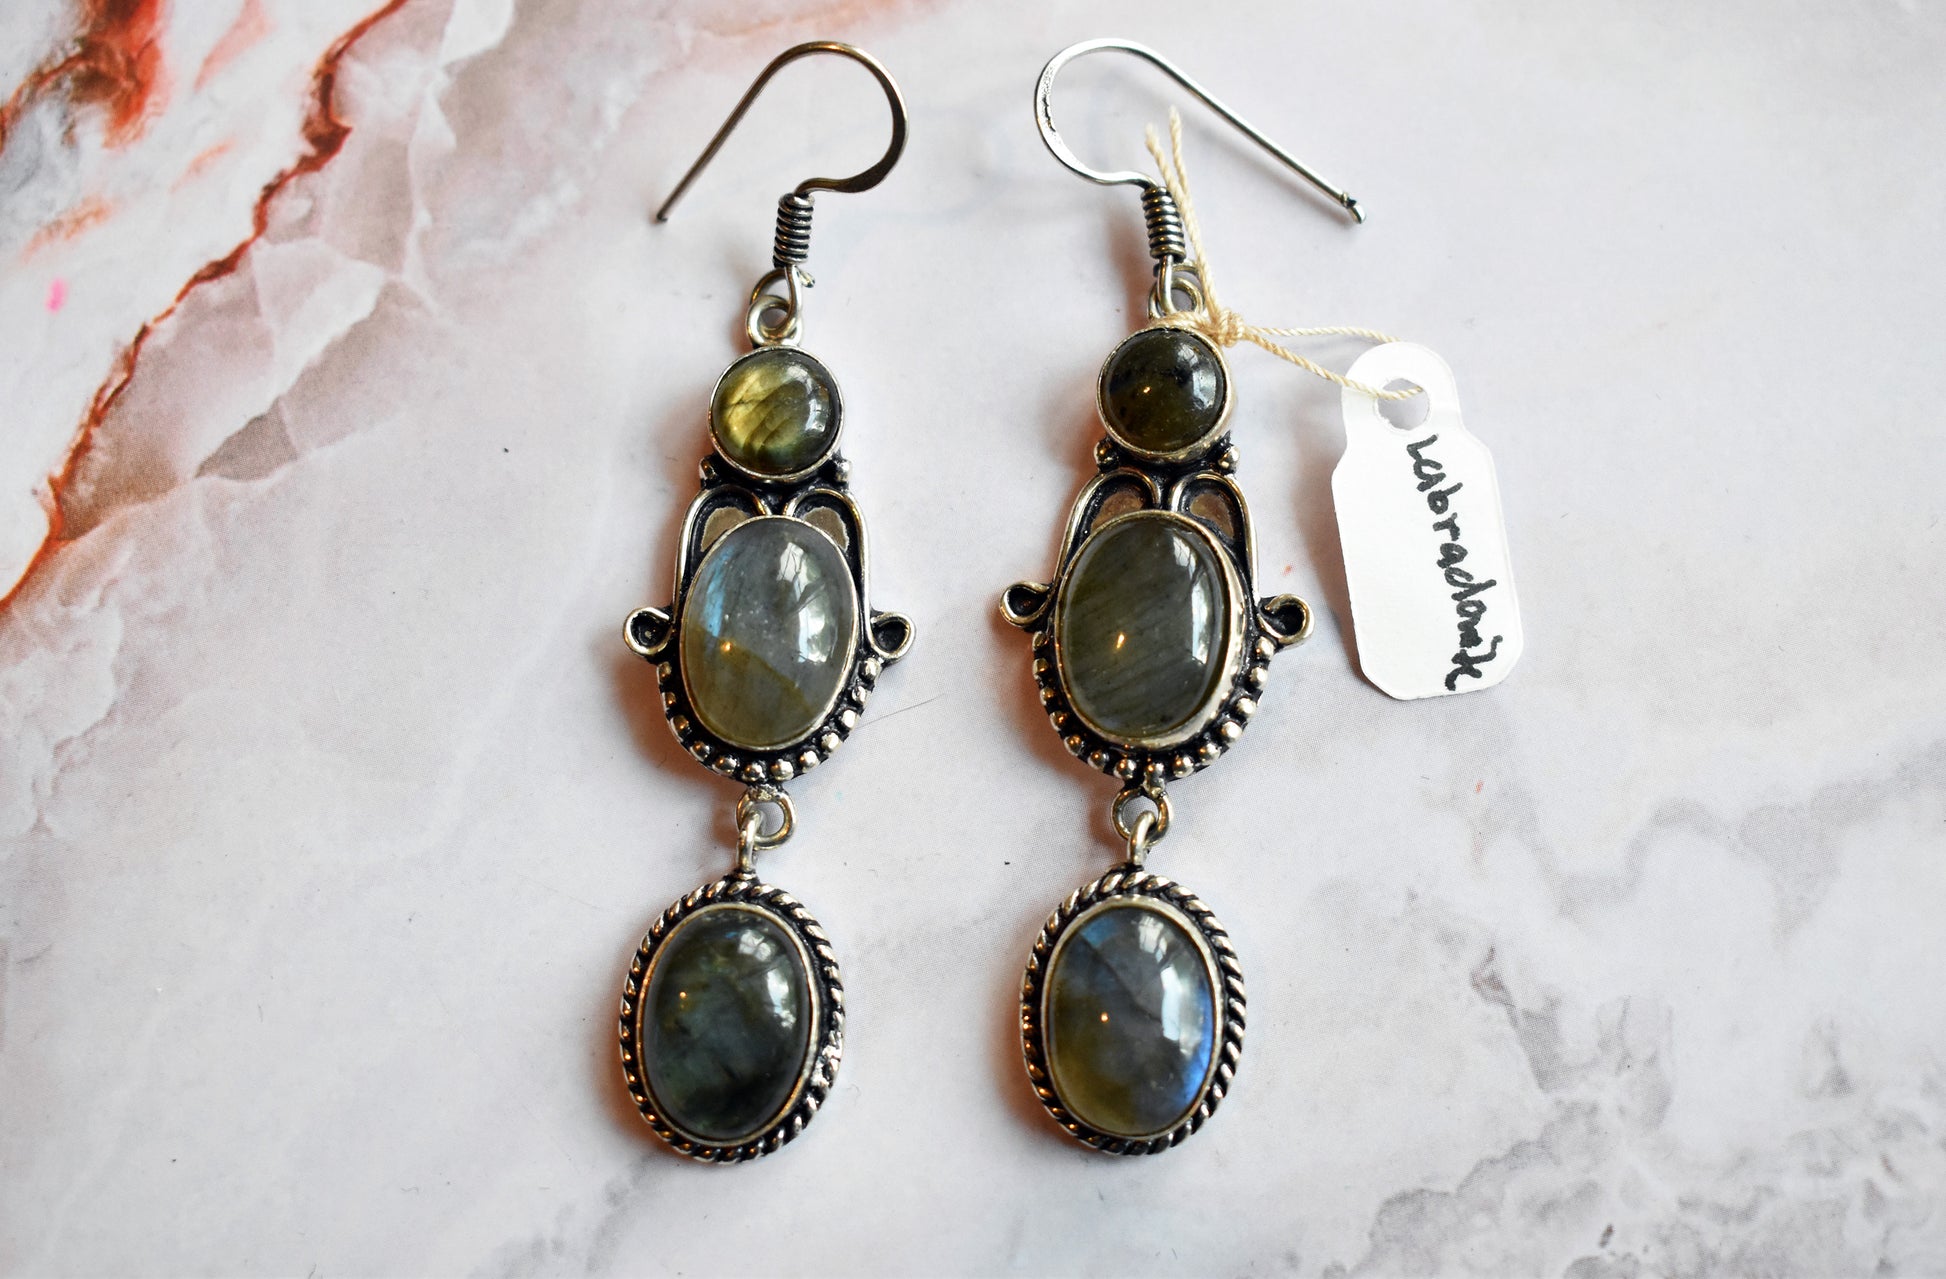 stones-of-transformation - Labradorite Earrings - Stones of Transformation - 